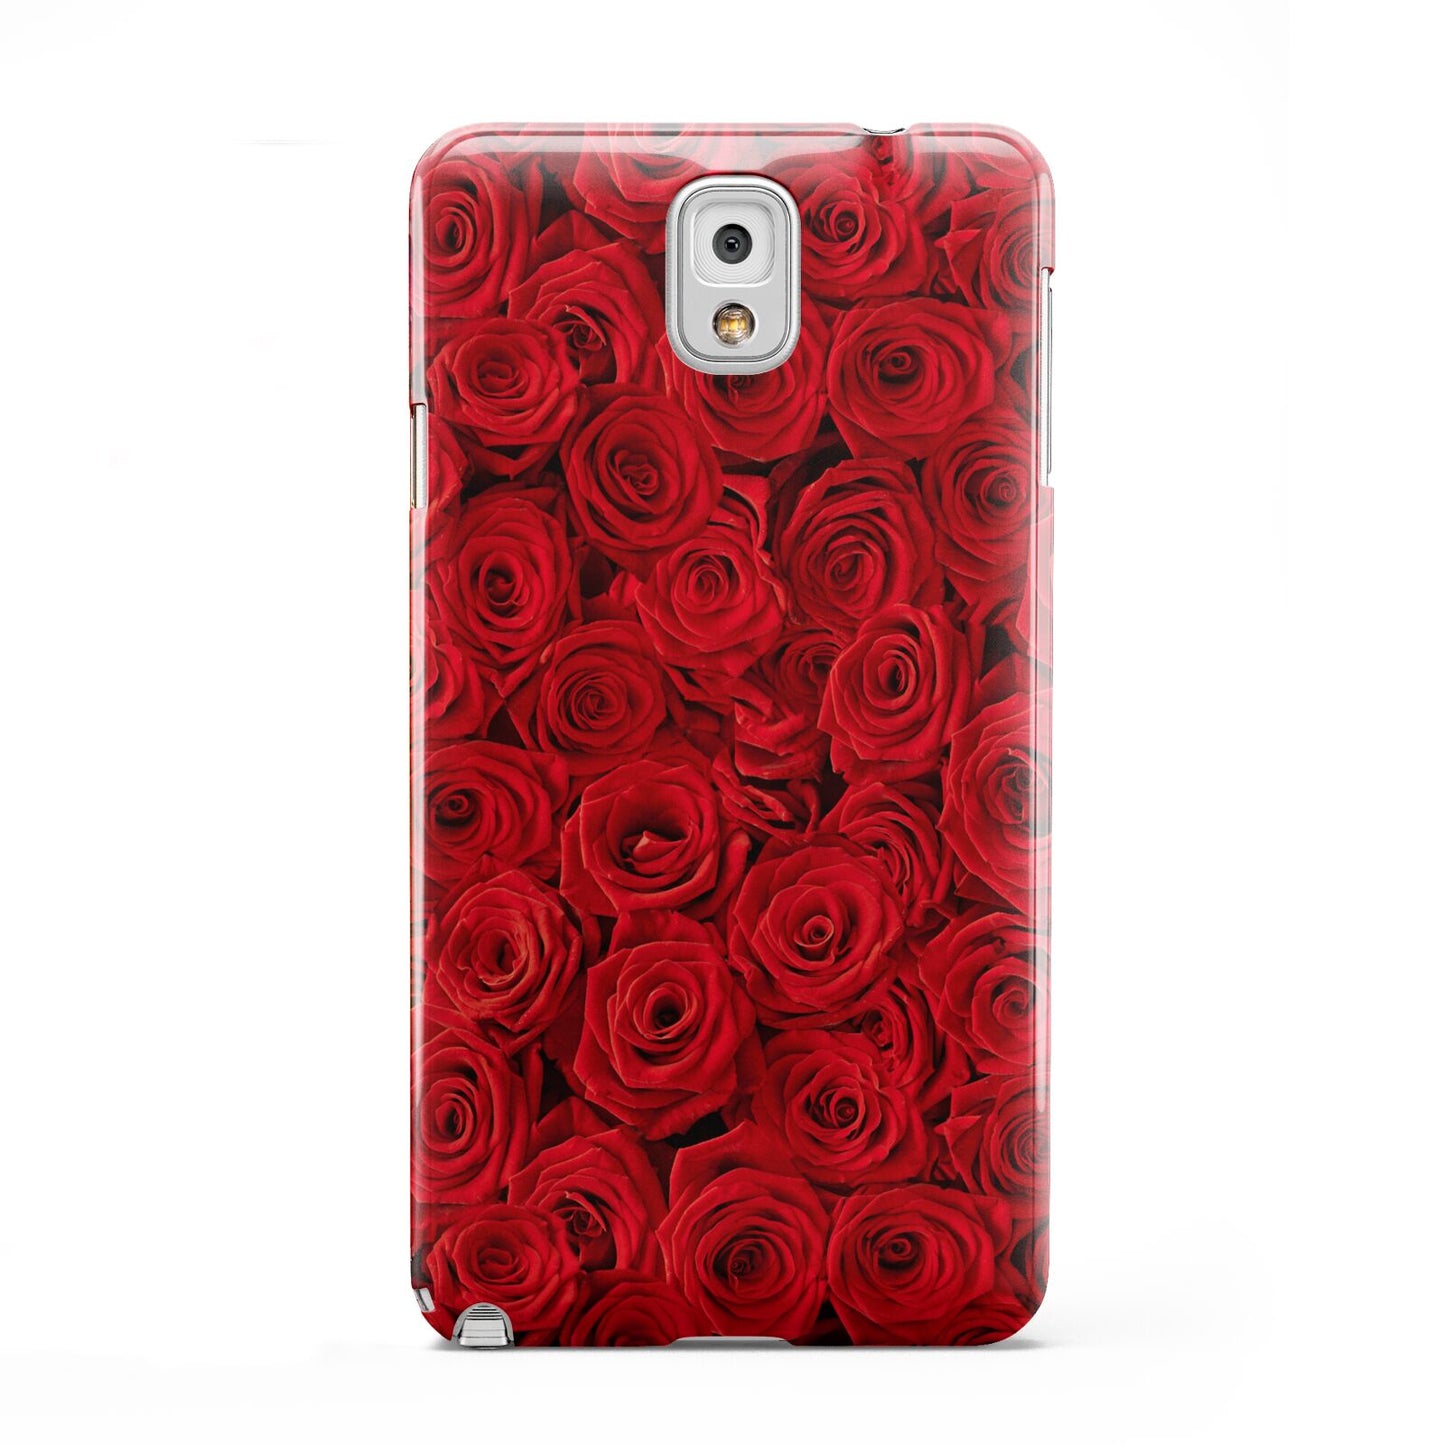 Red Rose Samsung Galaxy Note 3 Case